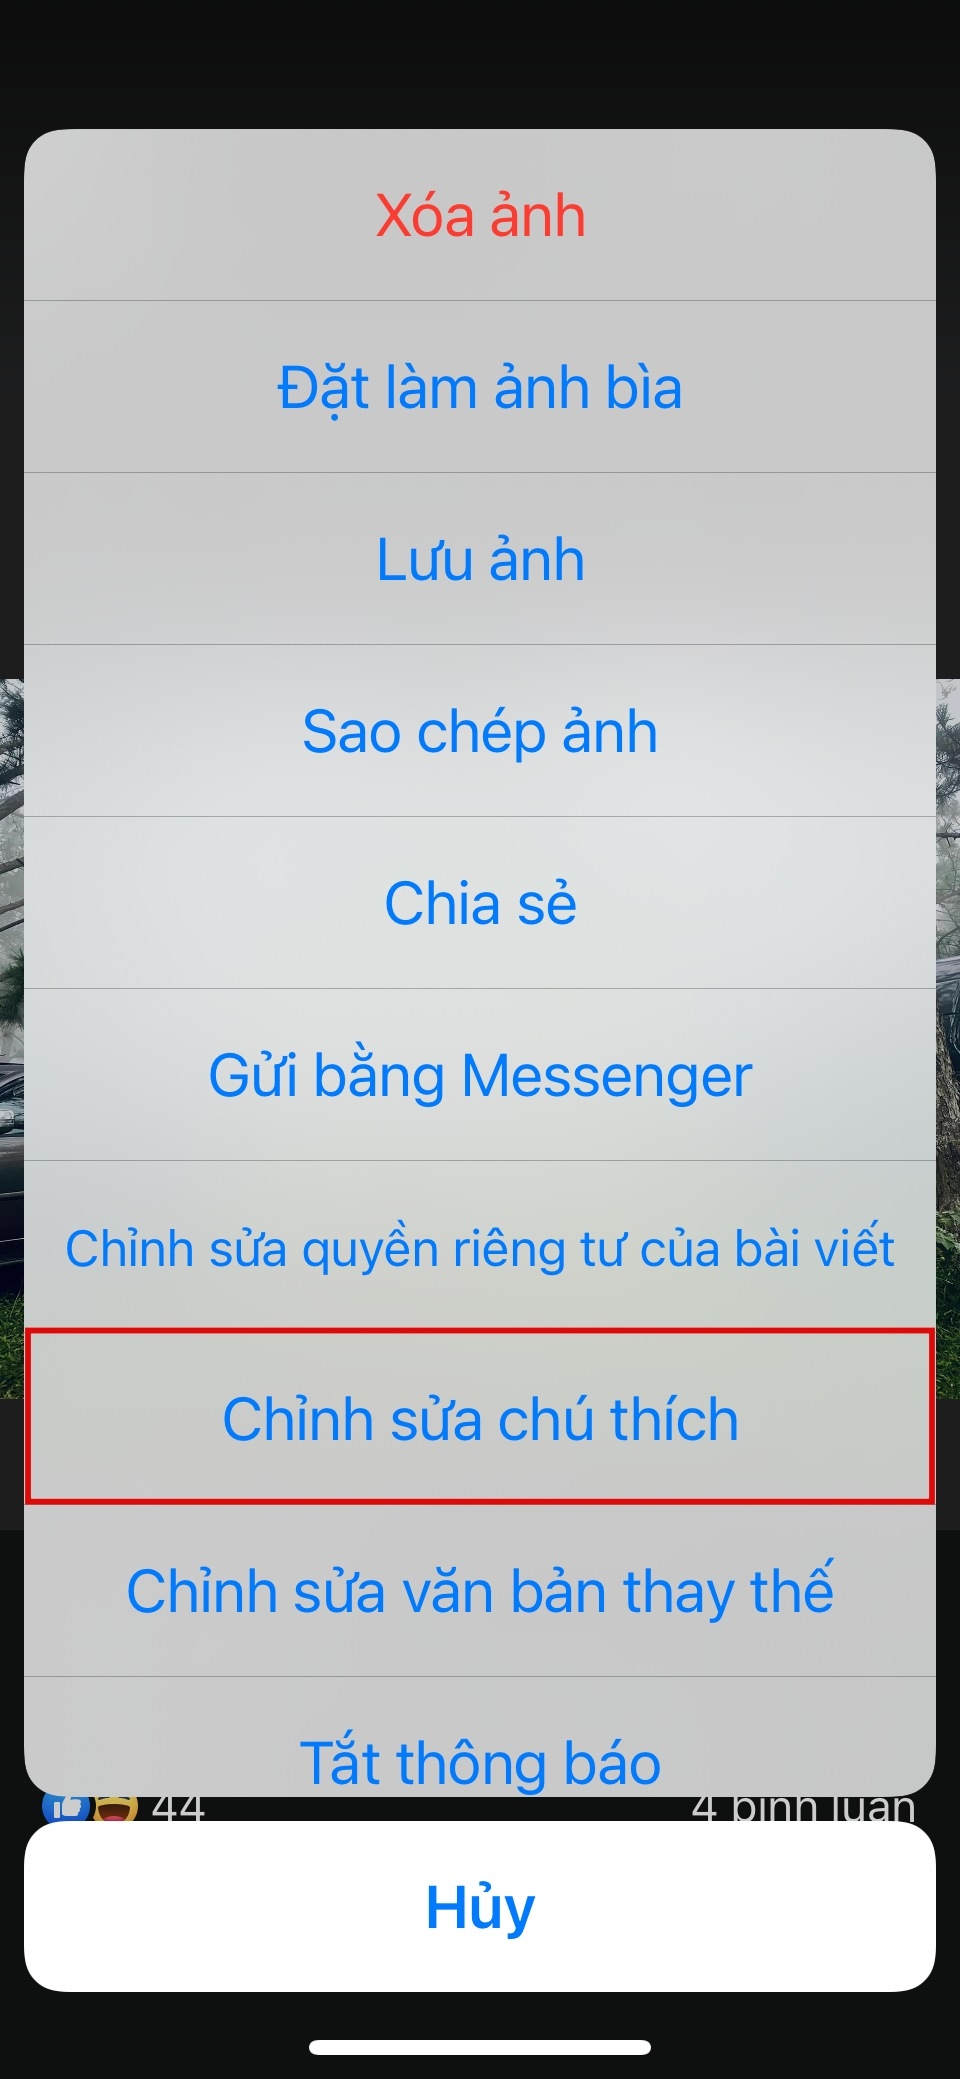 facebook khong cho sua bai dang tren dien thoai, loi hay la tinh nang hinh anh 3